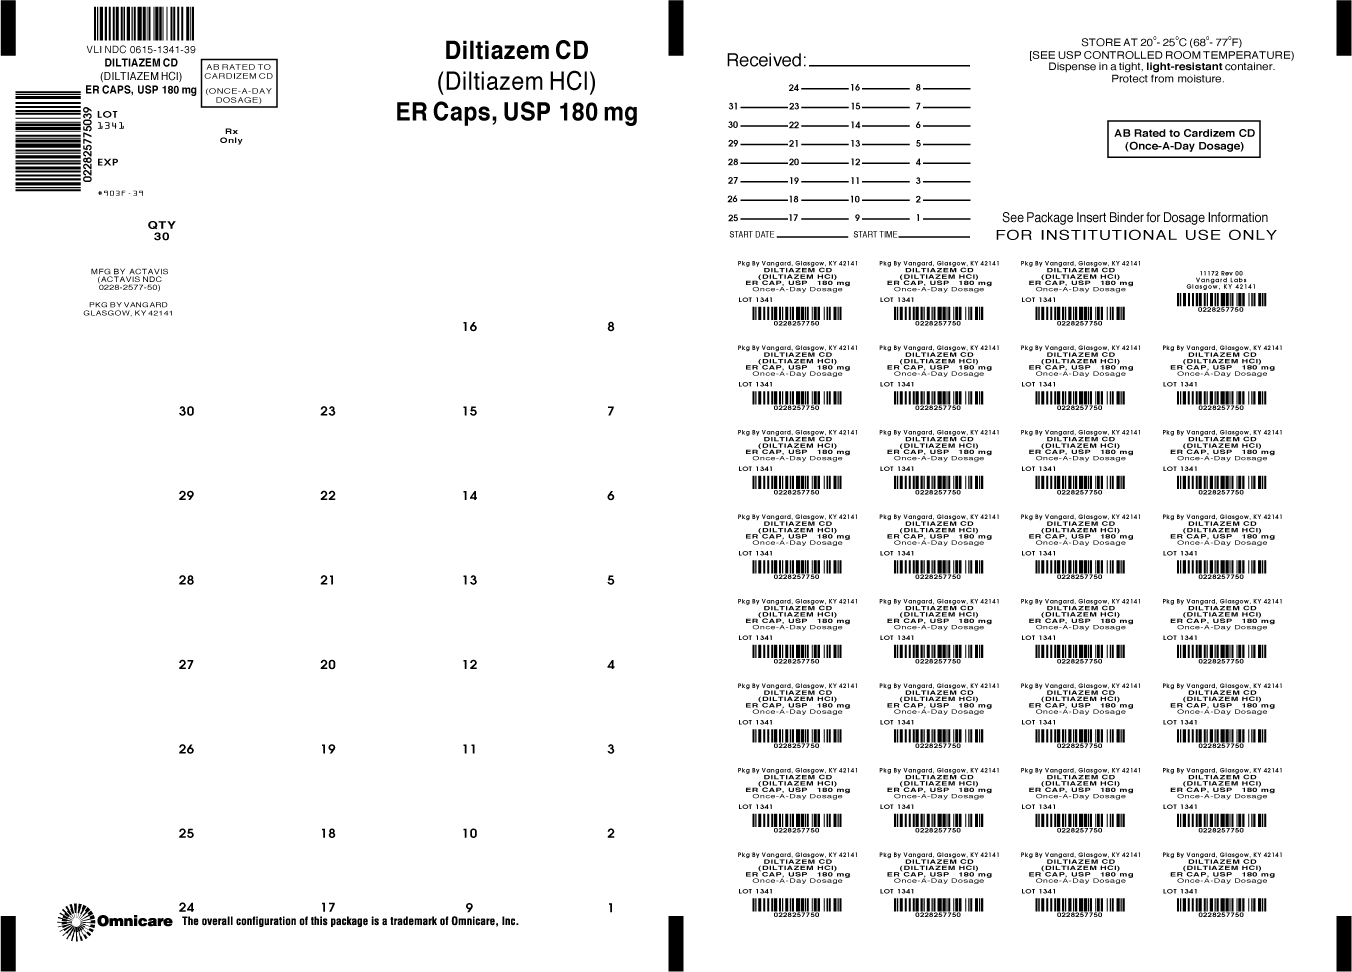 Principal Display Panel- Diltiazem CD ER Caps, USP 180mg